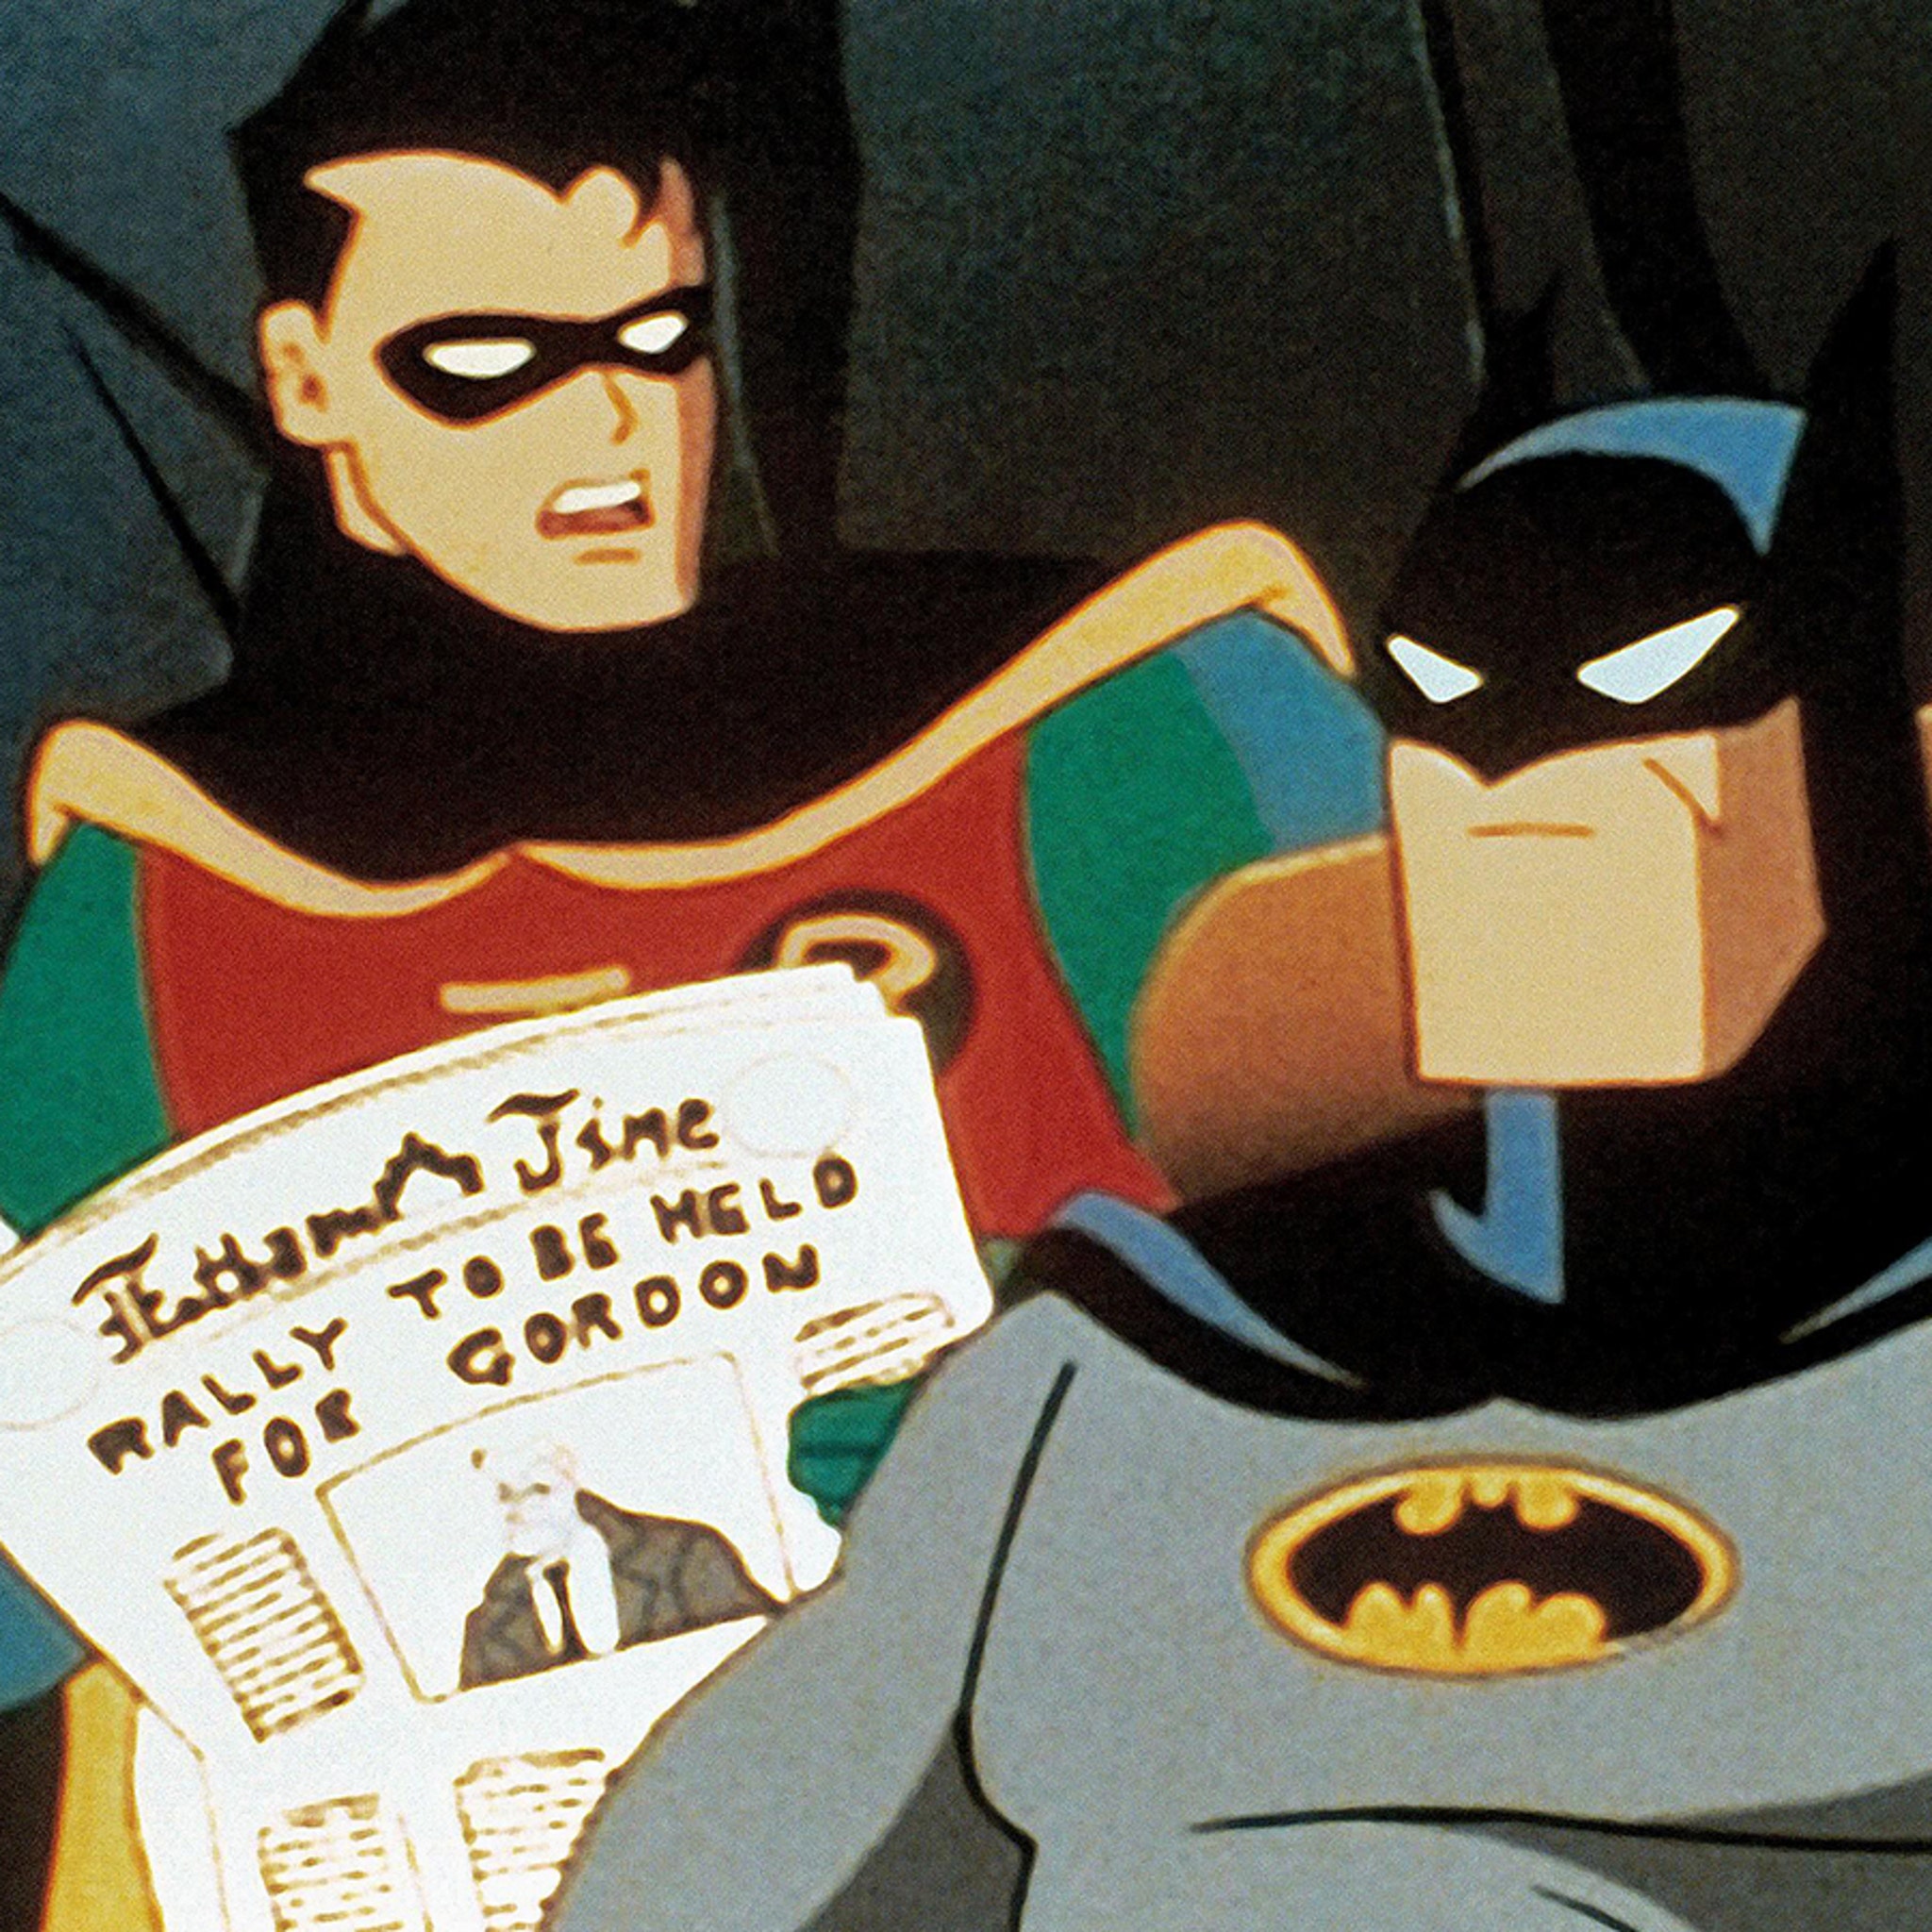 DC faces severe backlash after introducing gay Robin